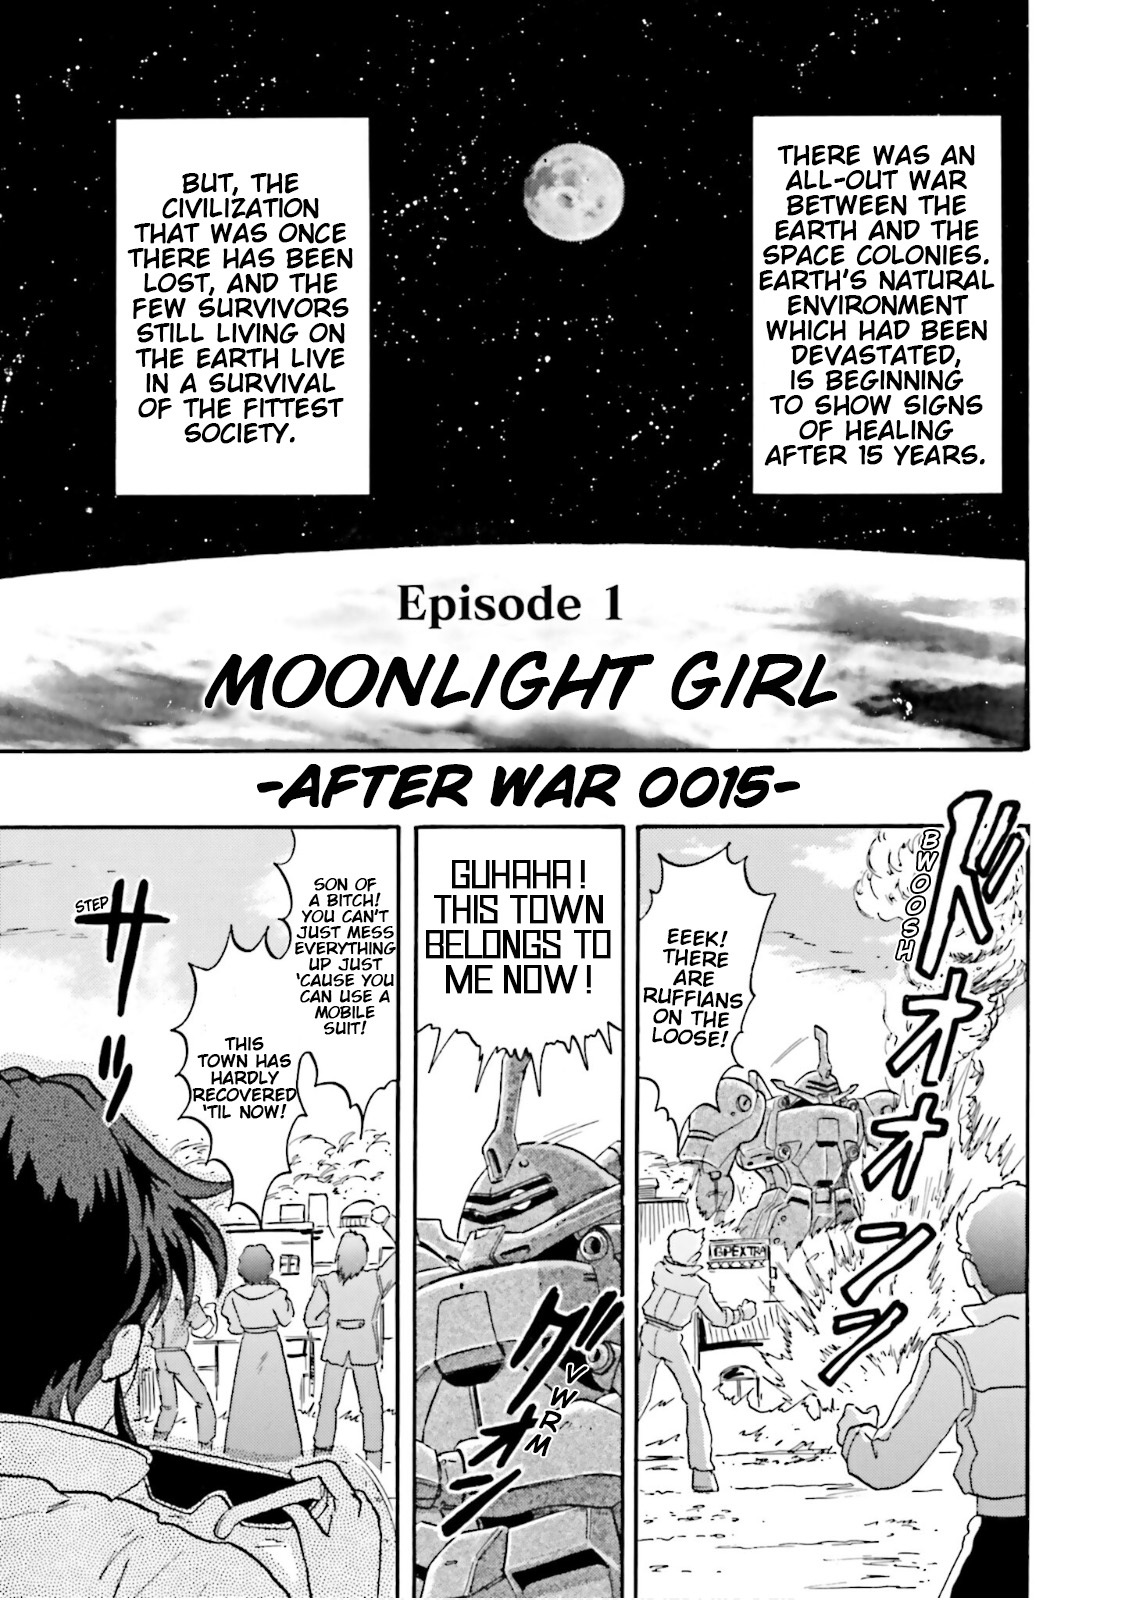 After War Gundam X Re:master Edition - Page 1